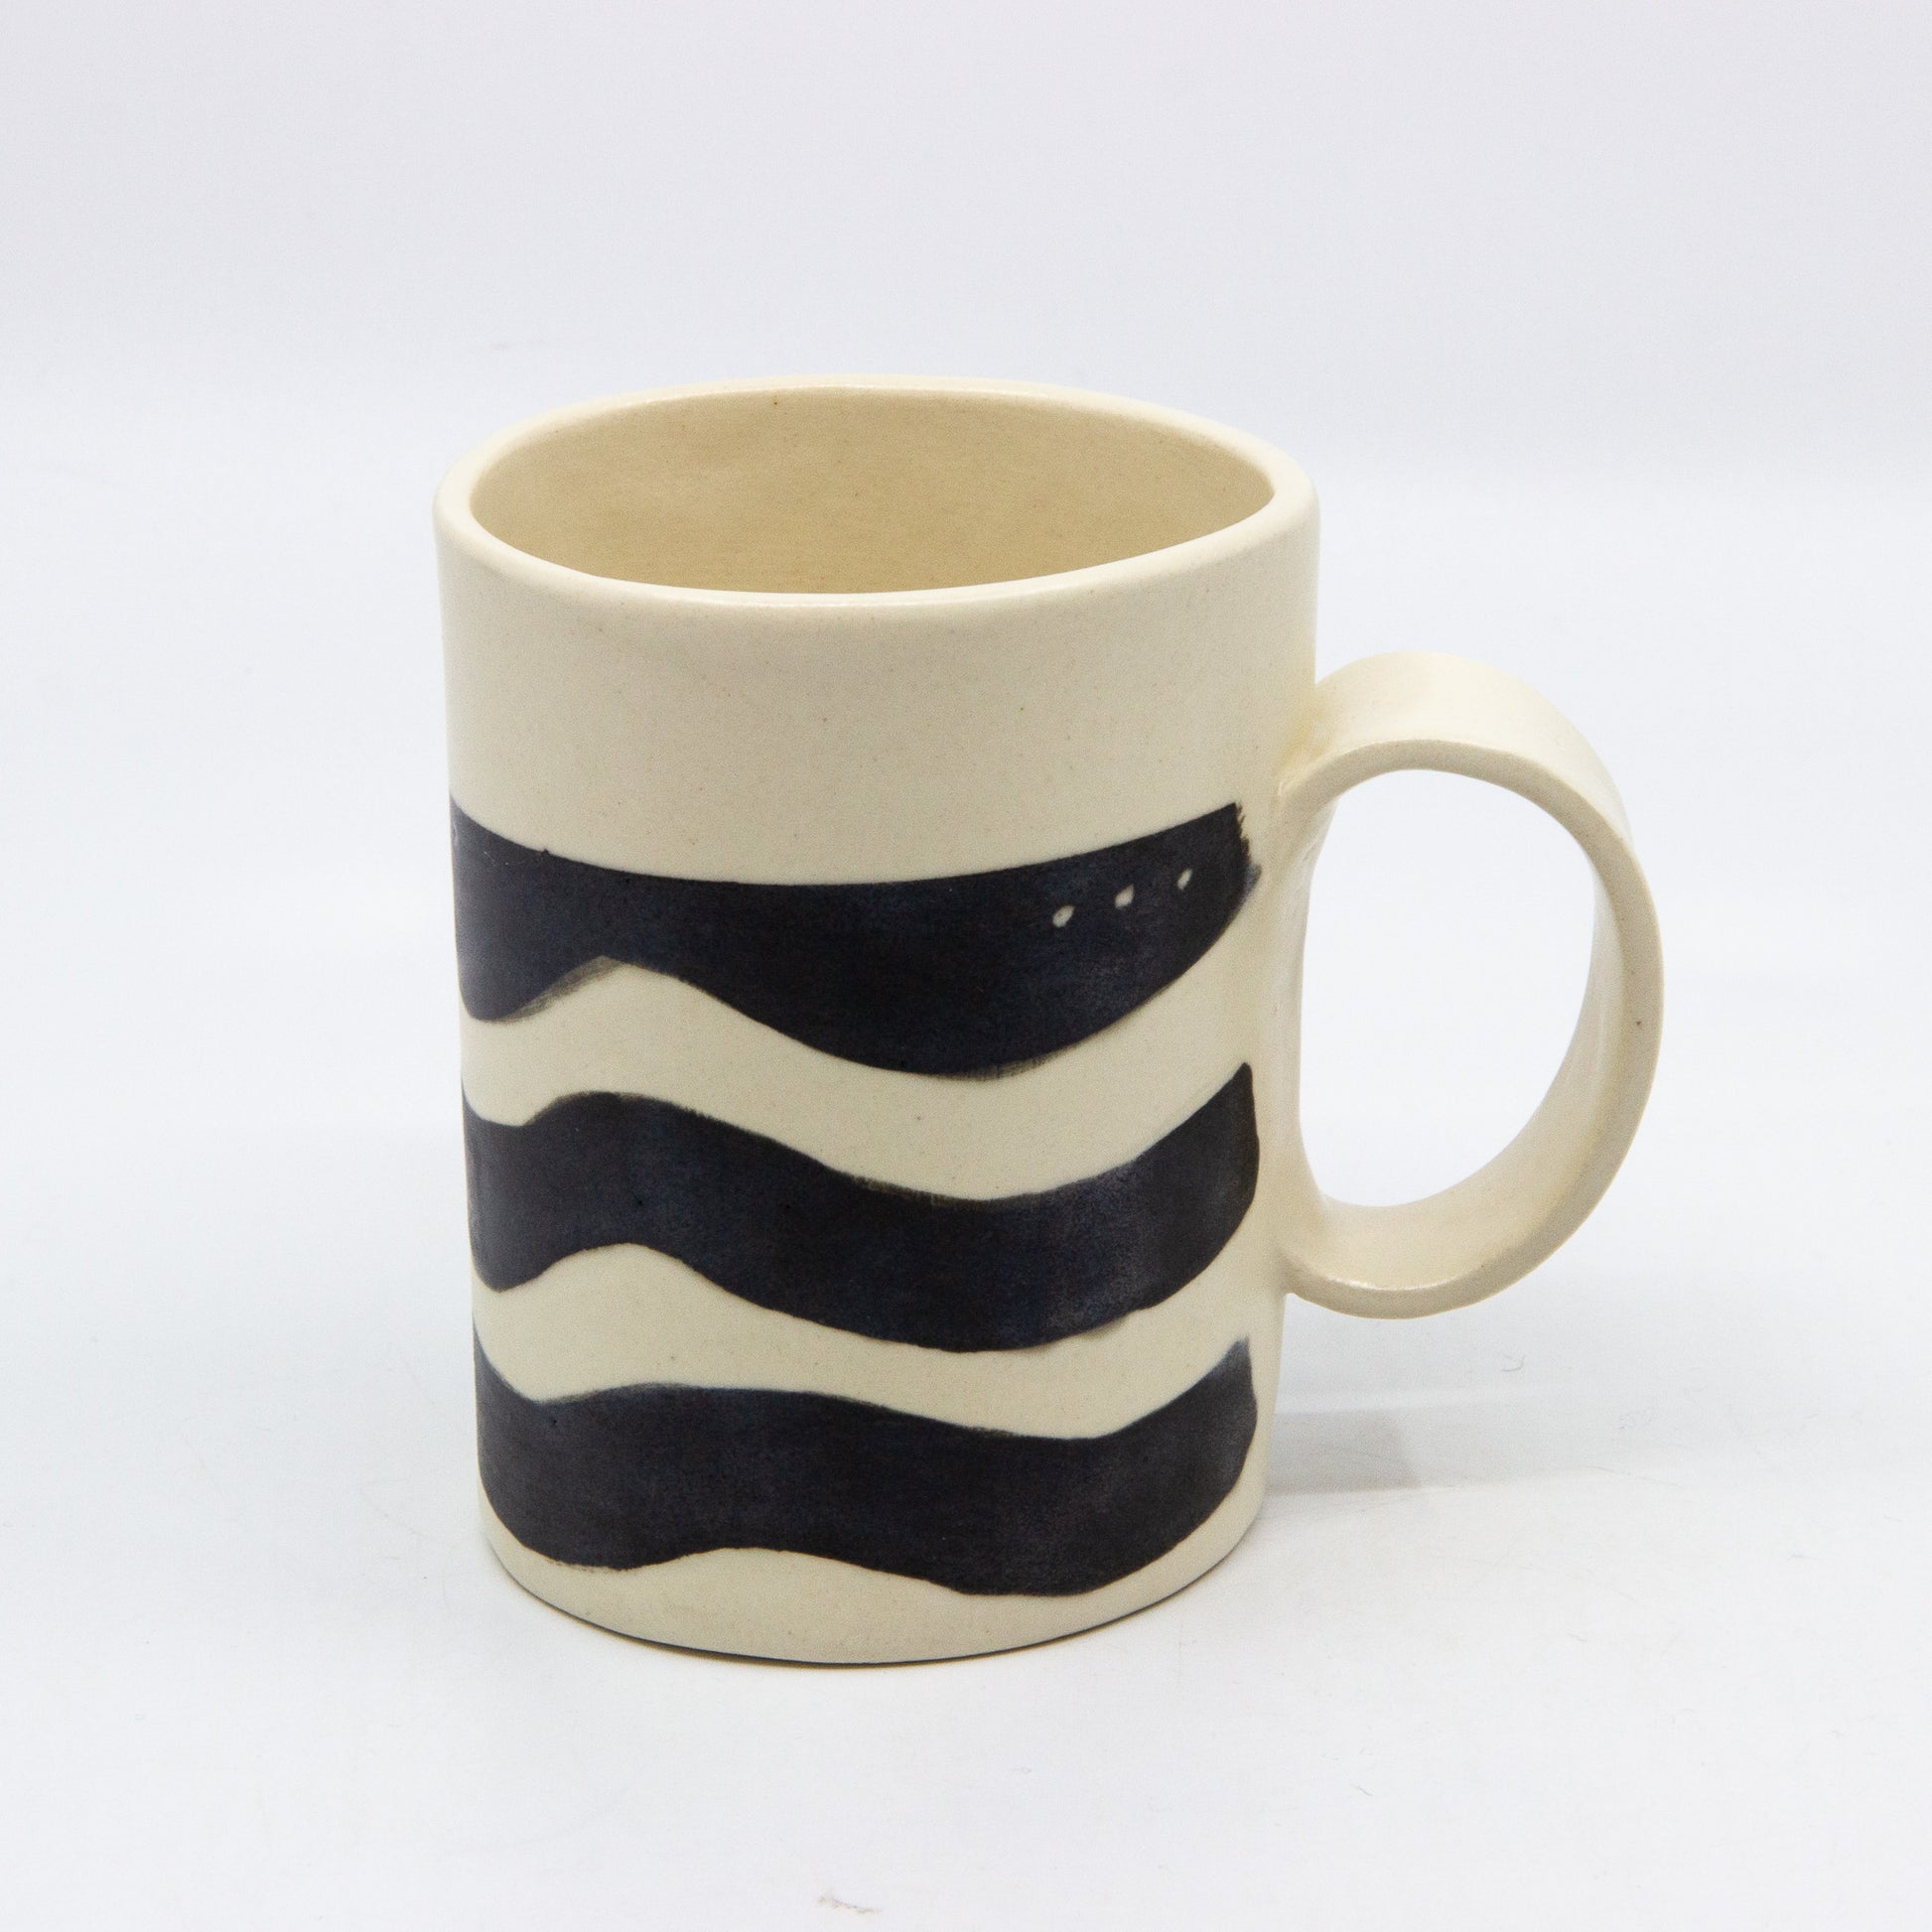 Black and white wave mug